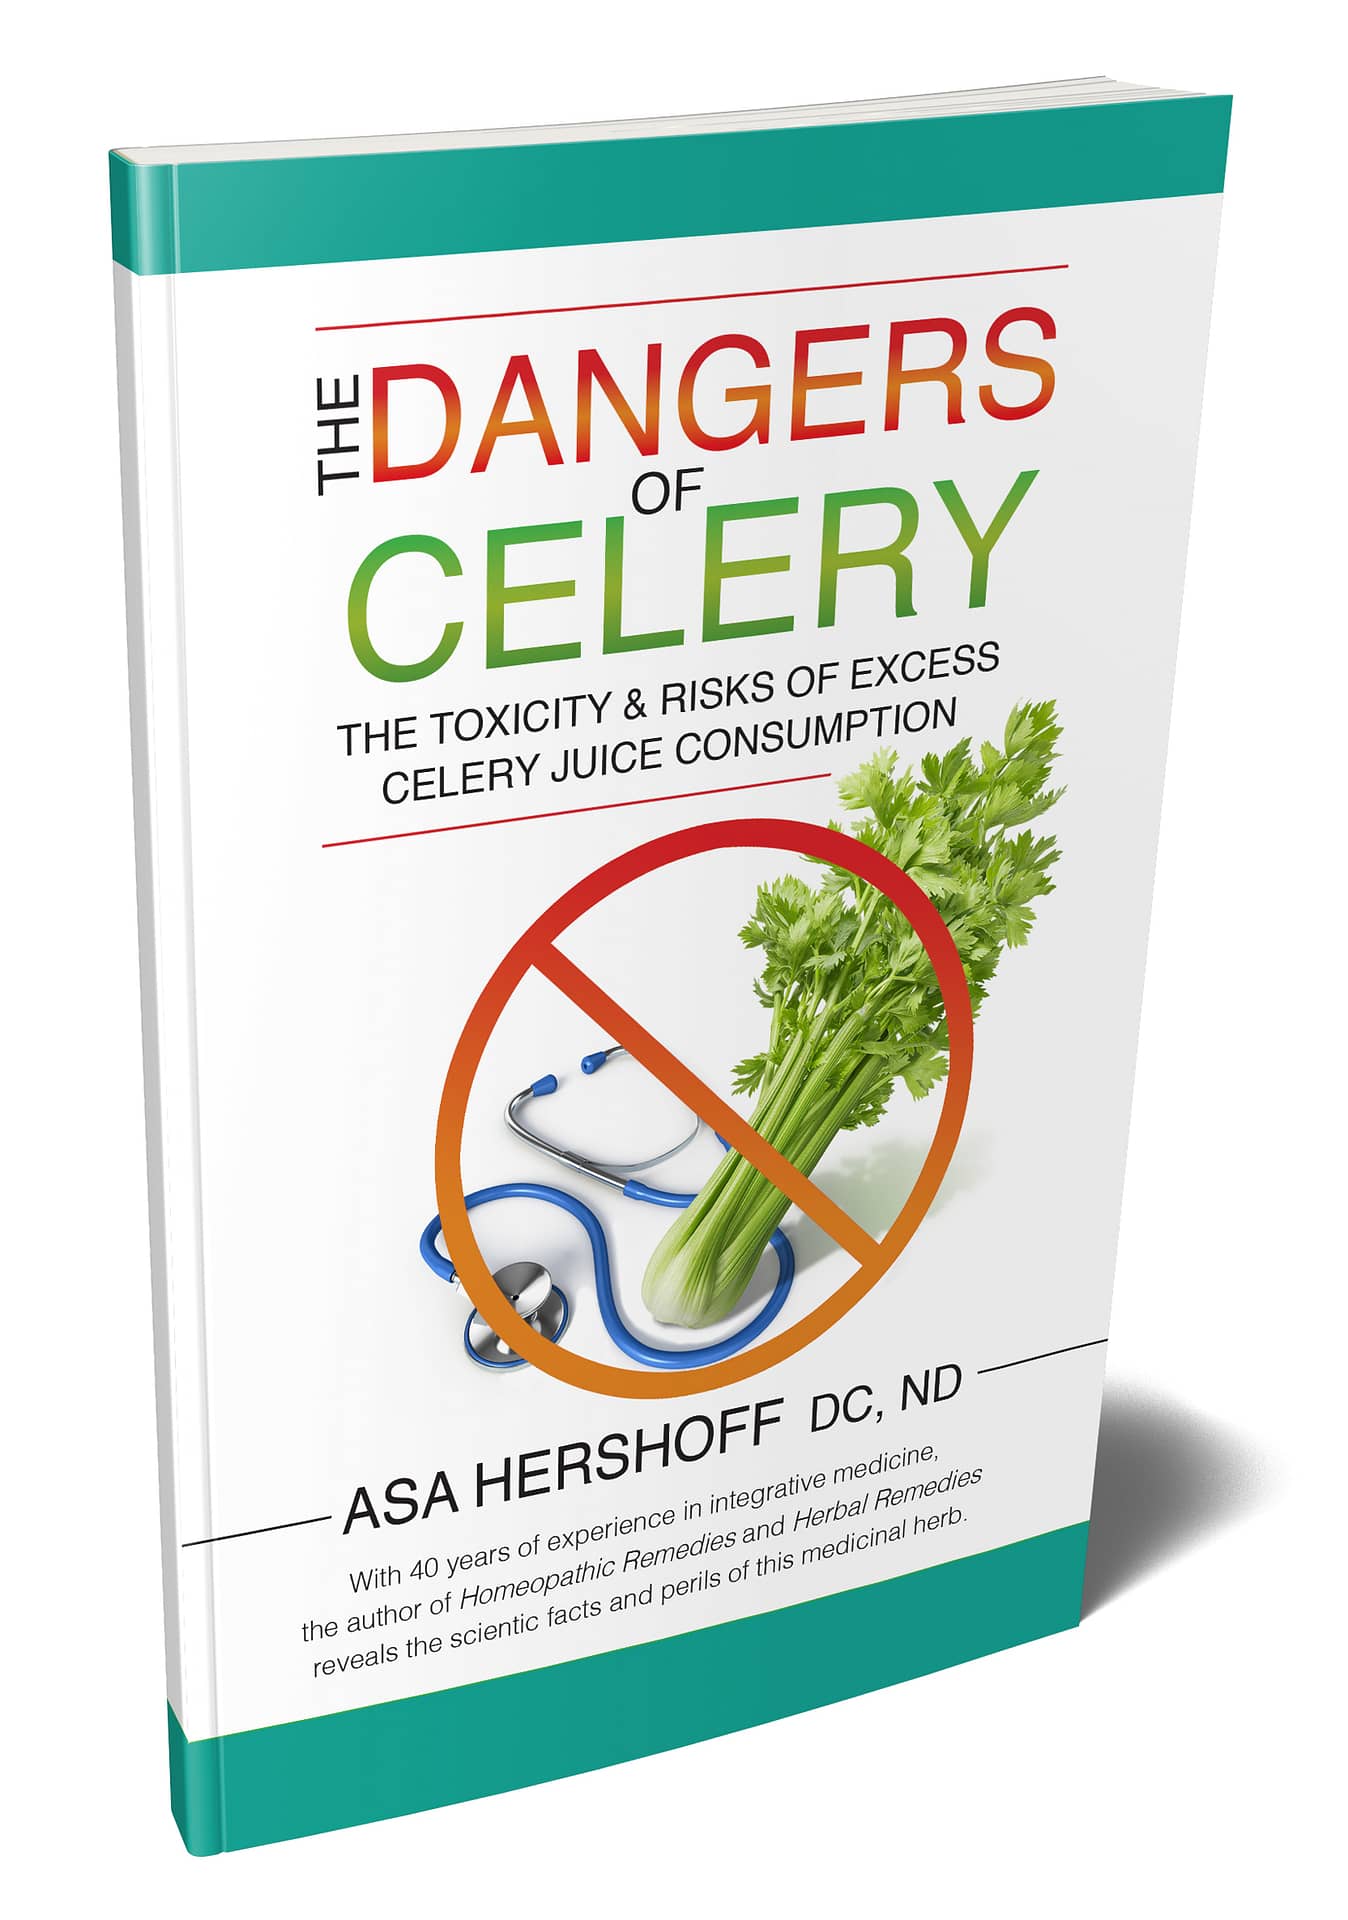 Dangers of Celery book cover